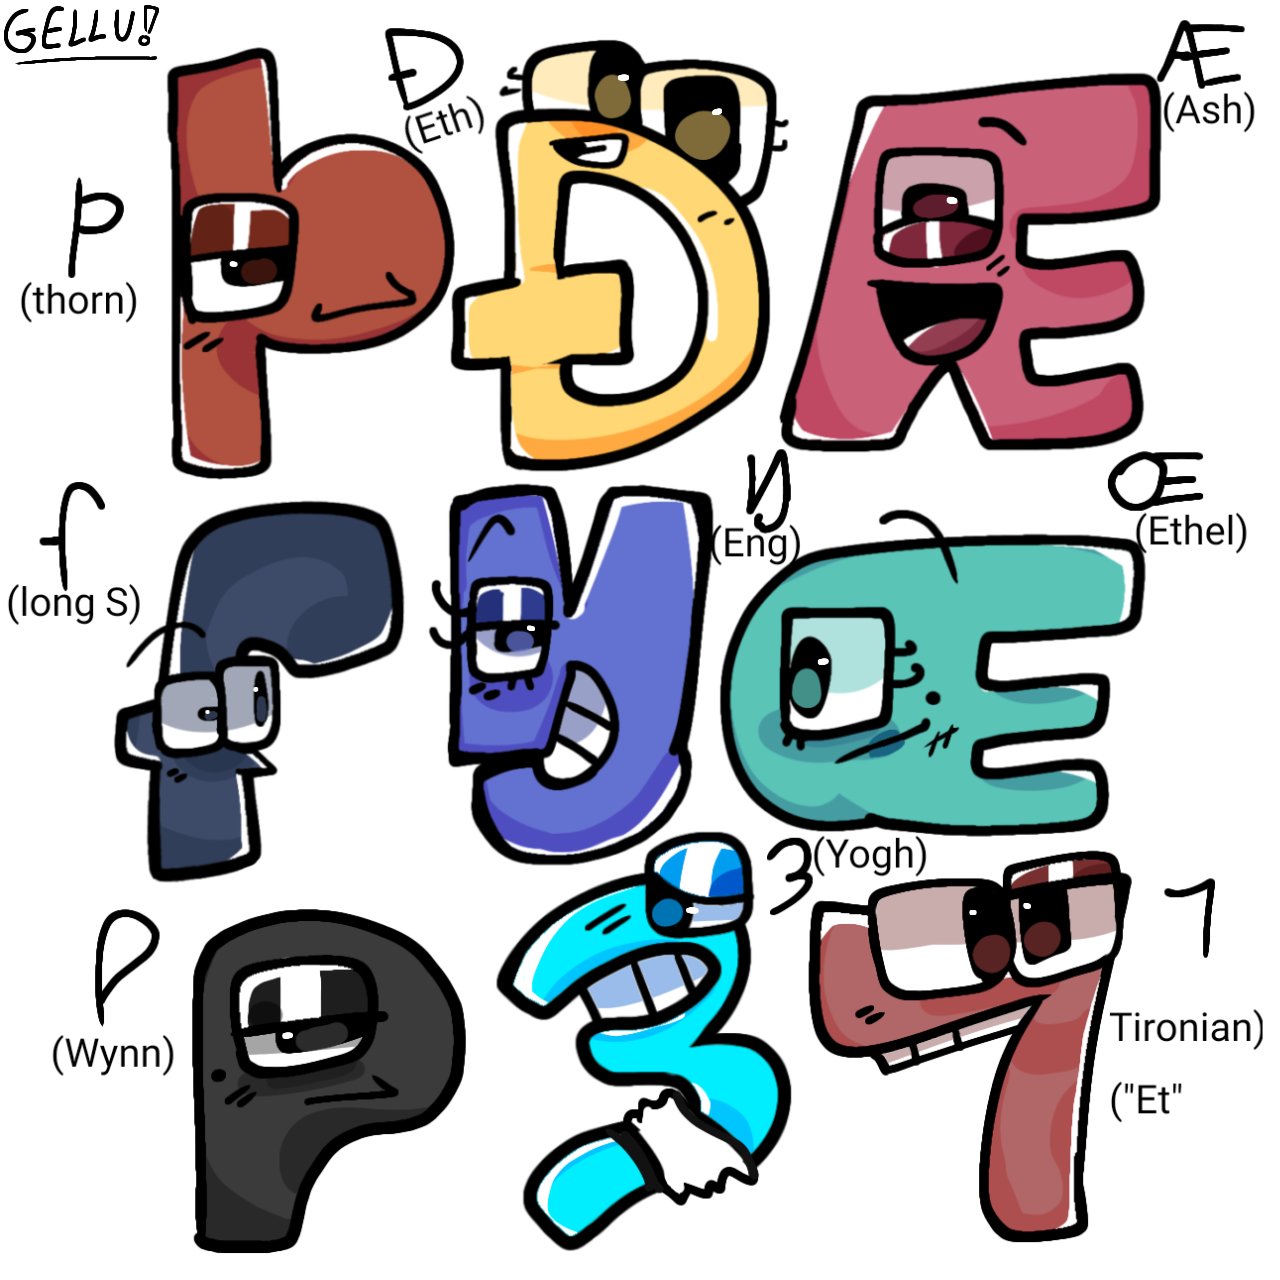 Alphabet Lore Korean 